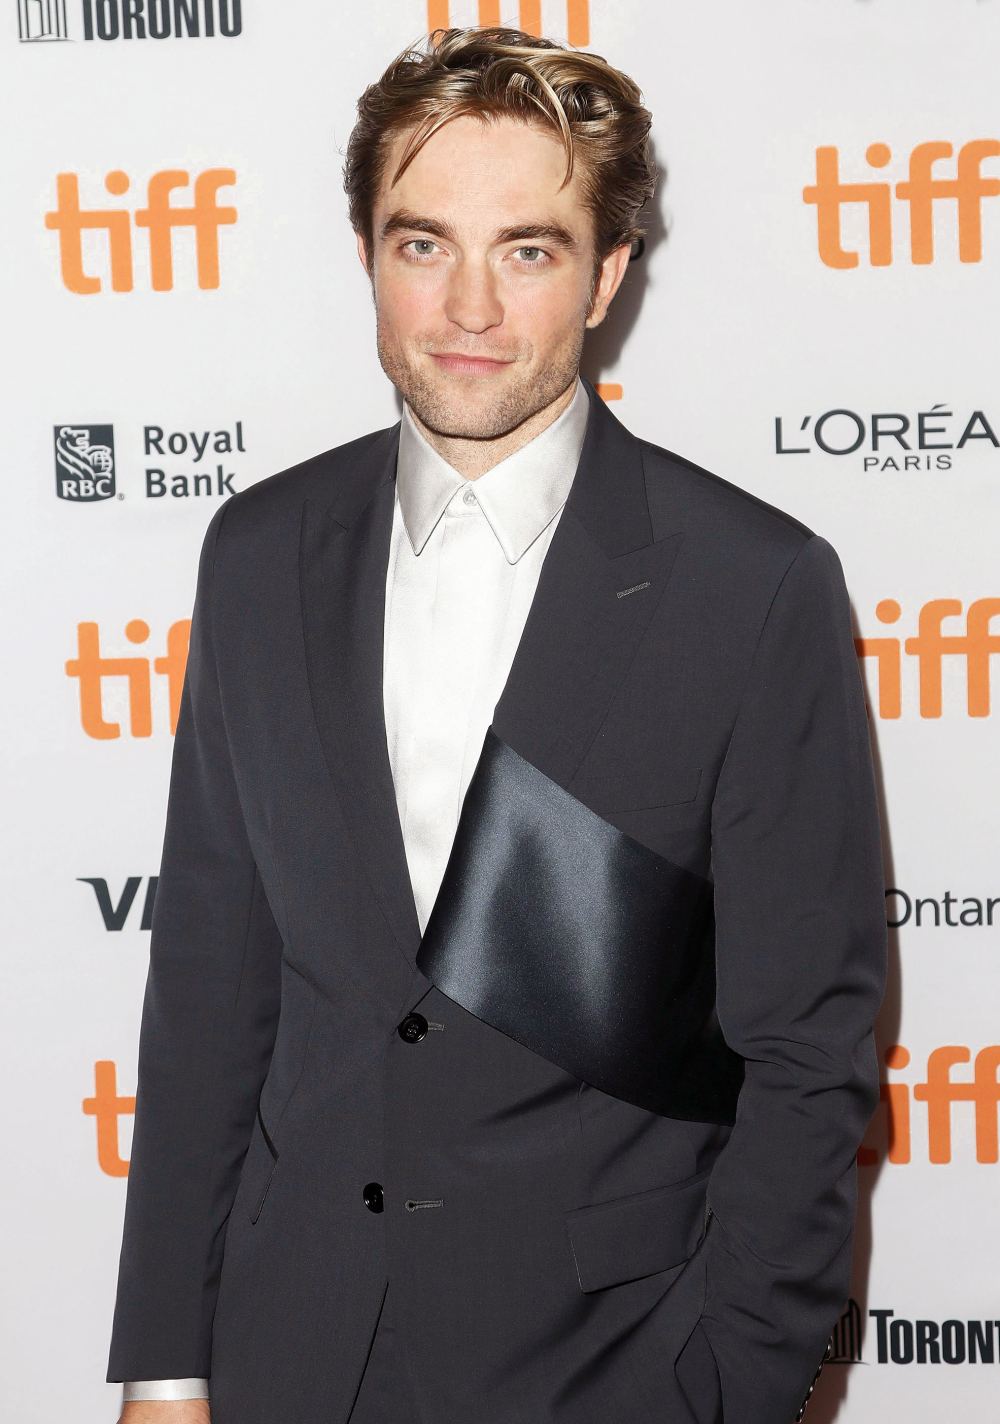 Robert Pattinson Reveals His Worst Fashion Moment